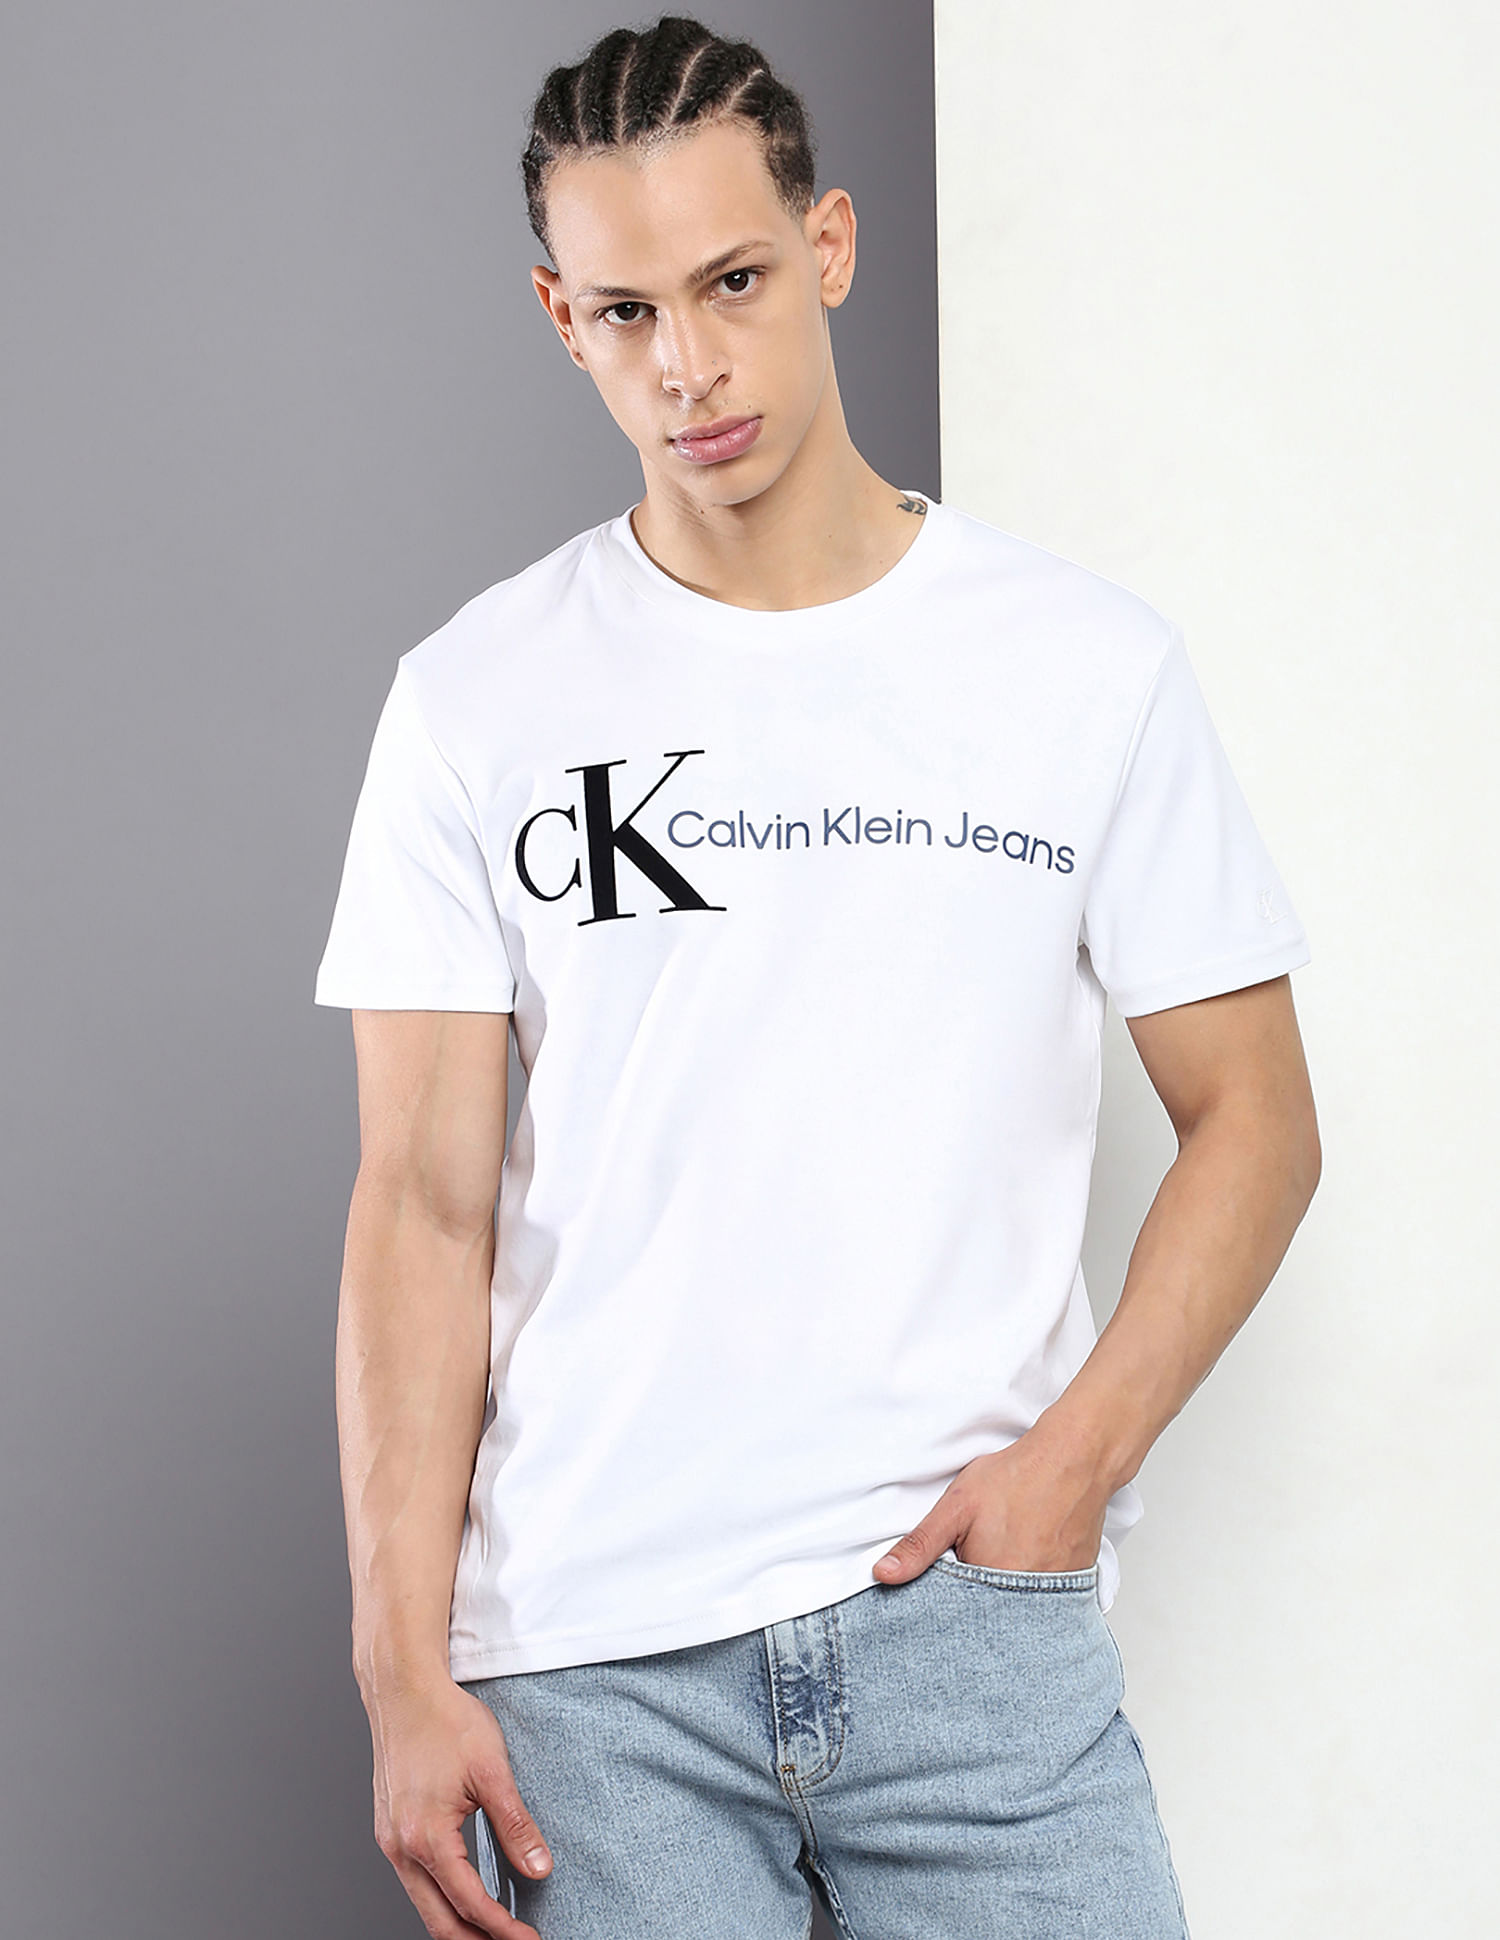 Buy Calvin Klein Jeans Brand Print Cotton T-Shirt 